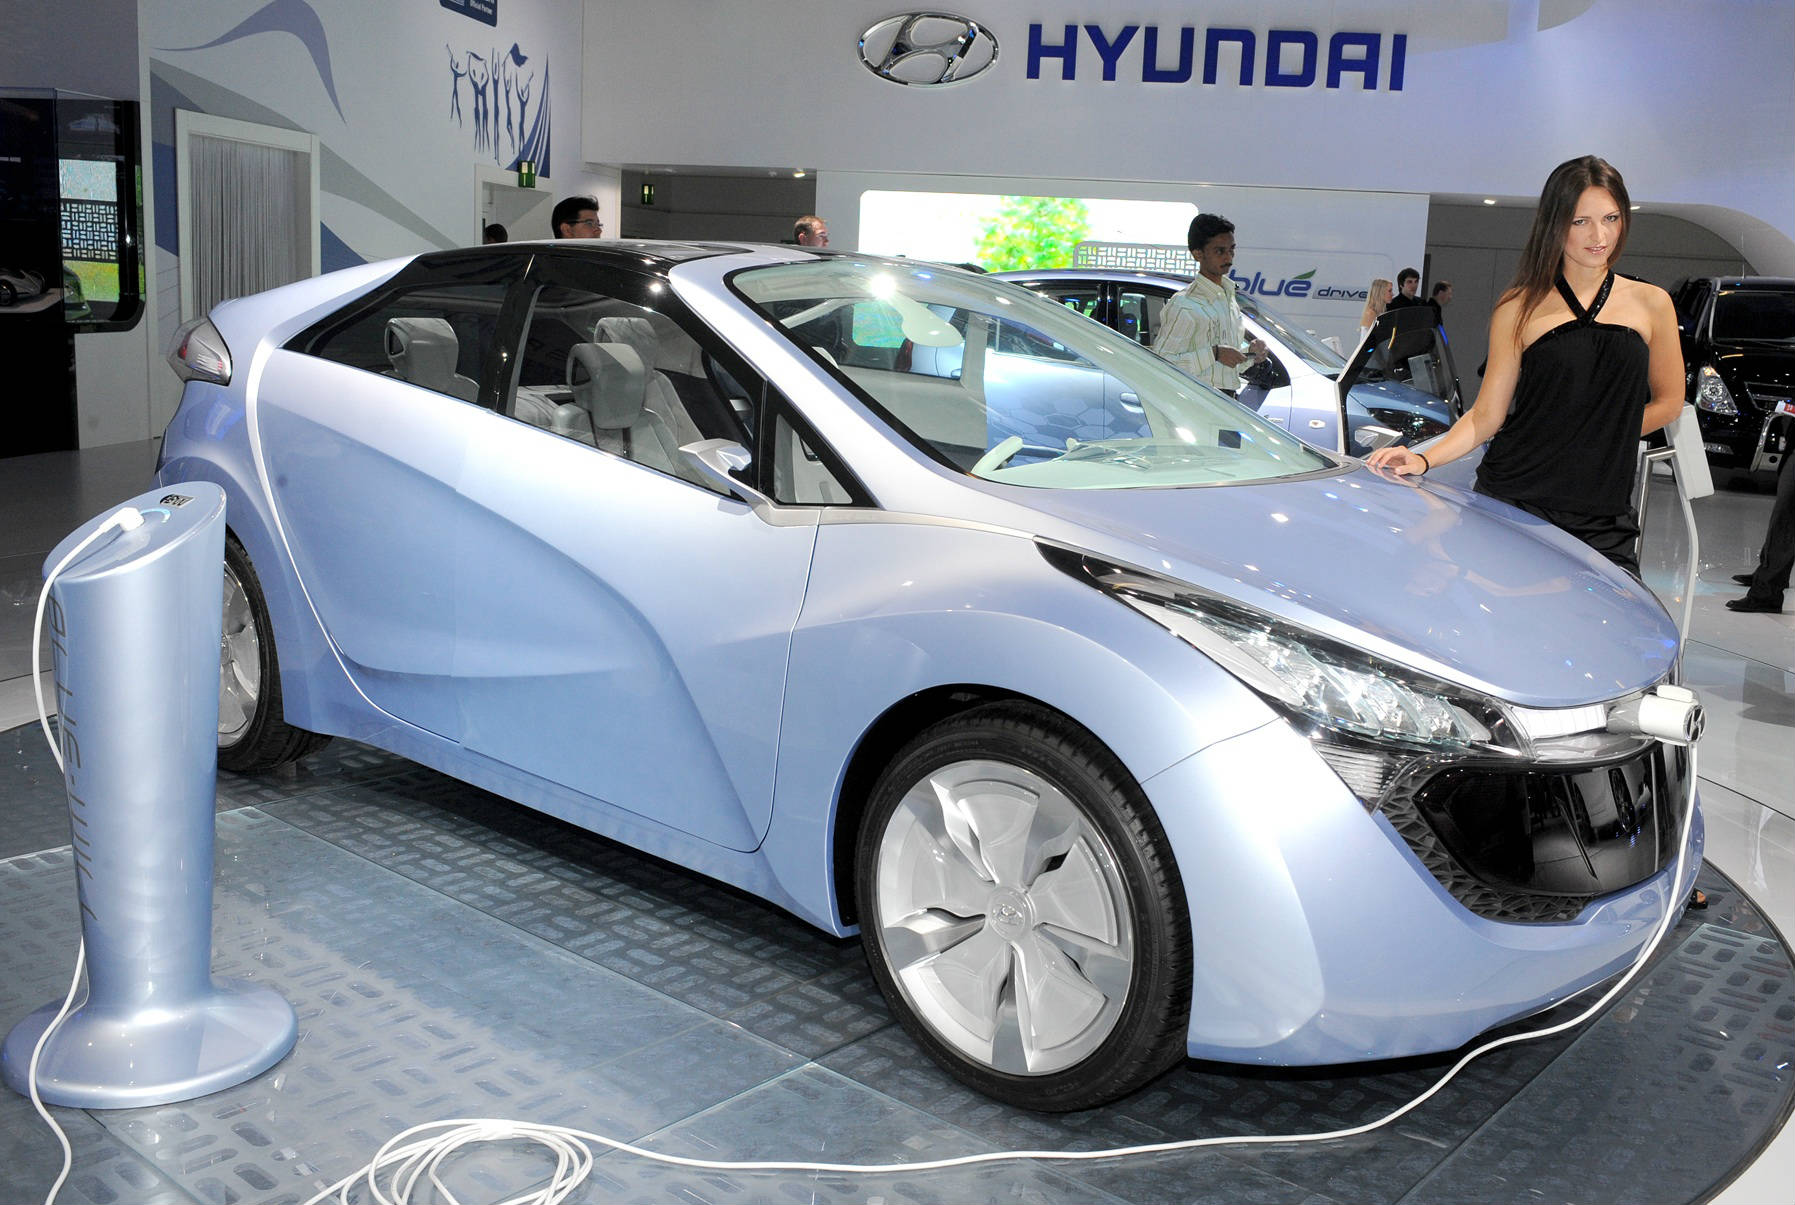 Hyundai Electric Vehicle